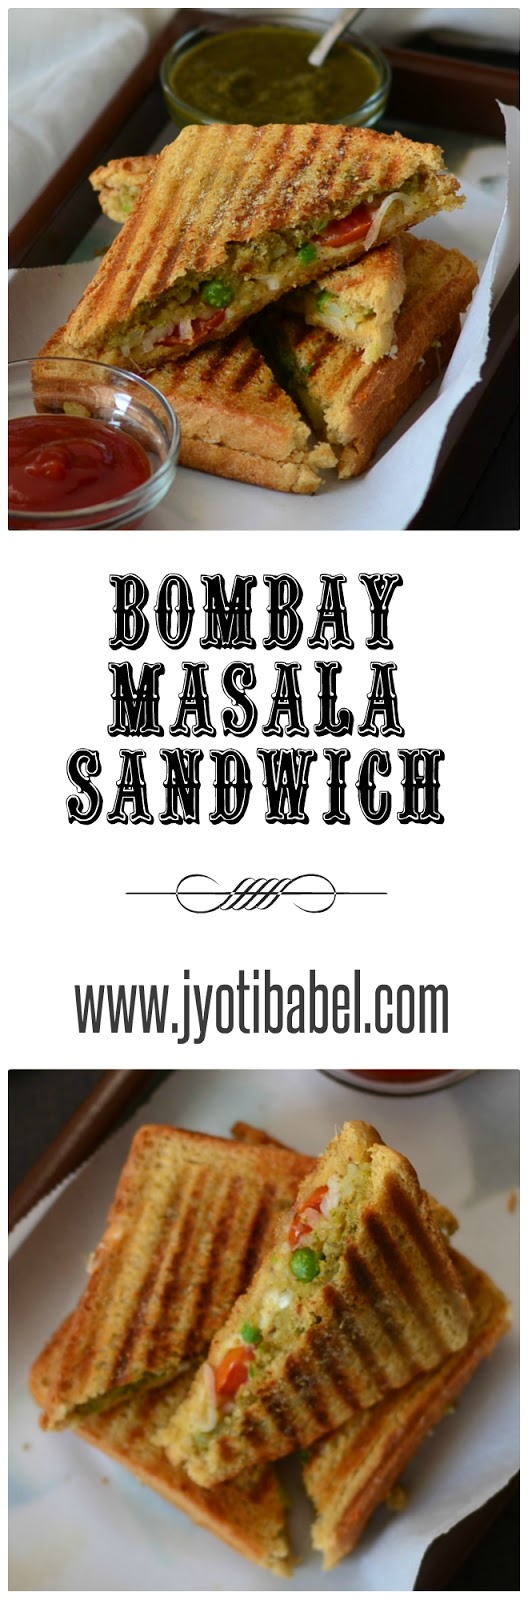 Bombay Masala Sandwich Recipe | A very popular roadside snack from the city of Mumbai, India. www.jyotibabel.com. Check the recipe to know how to make Bombay Masala Sandwich